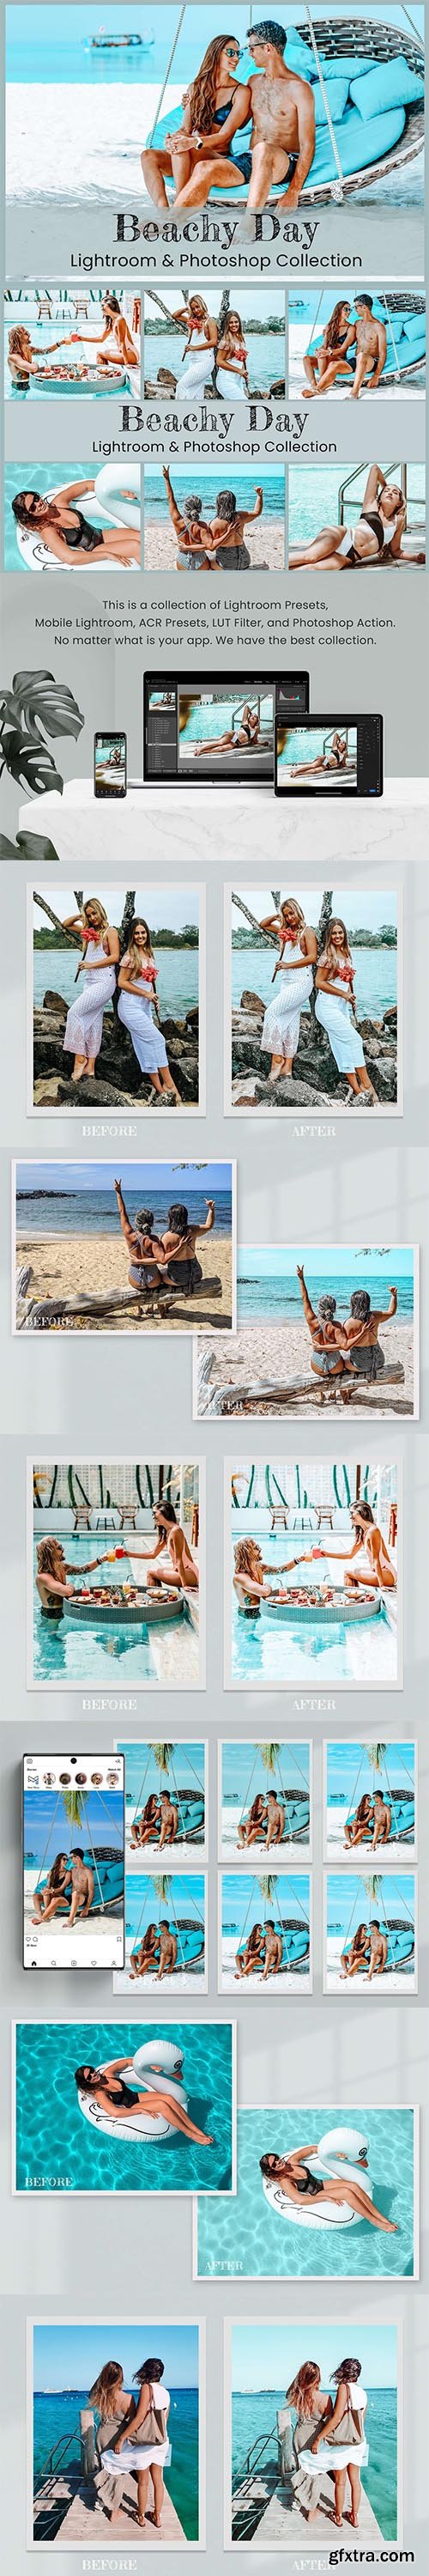 CreativeMarket - Beachy Day Photoshop Actions Presets 6964173